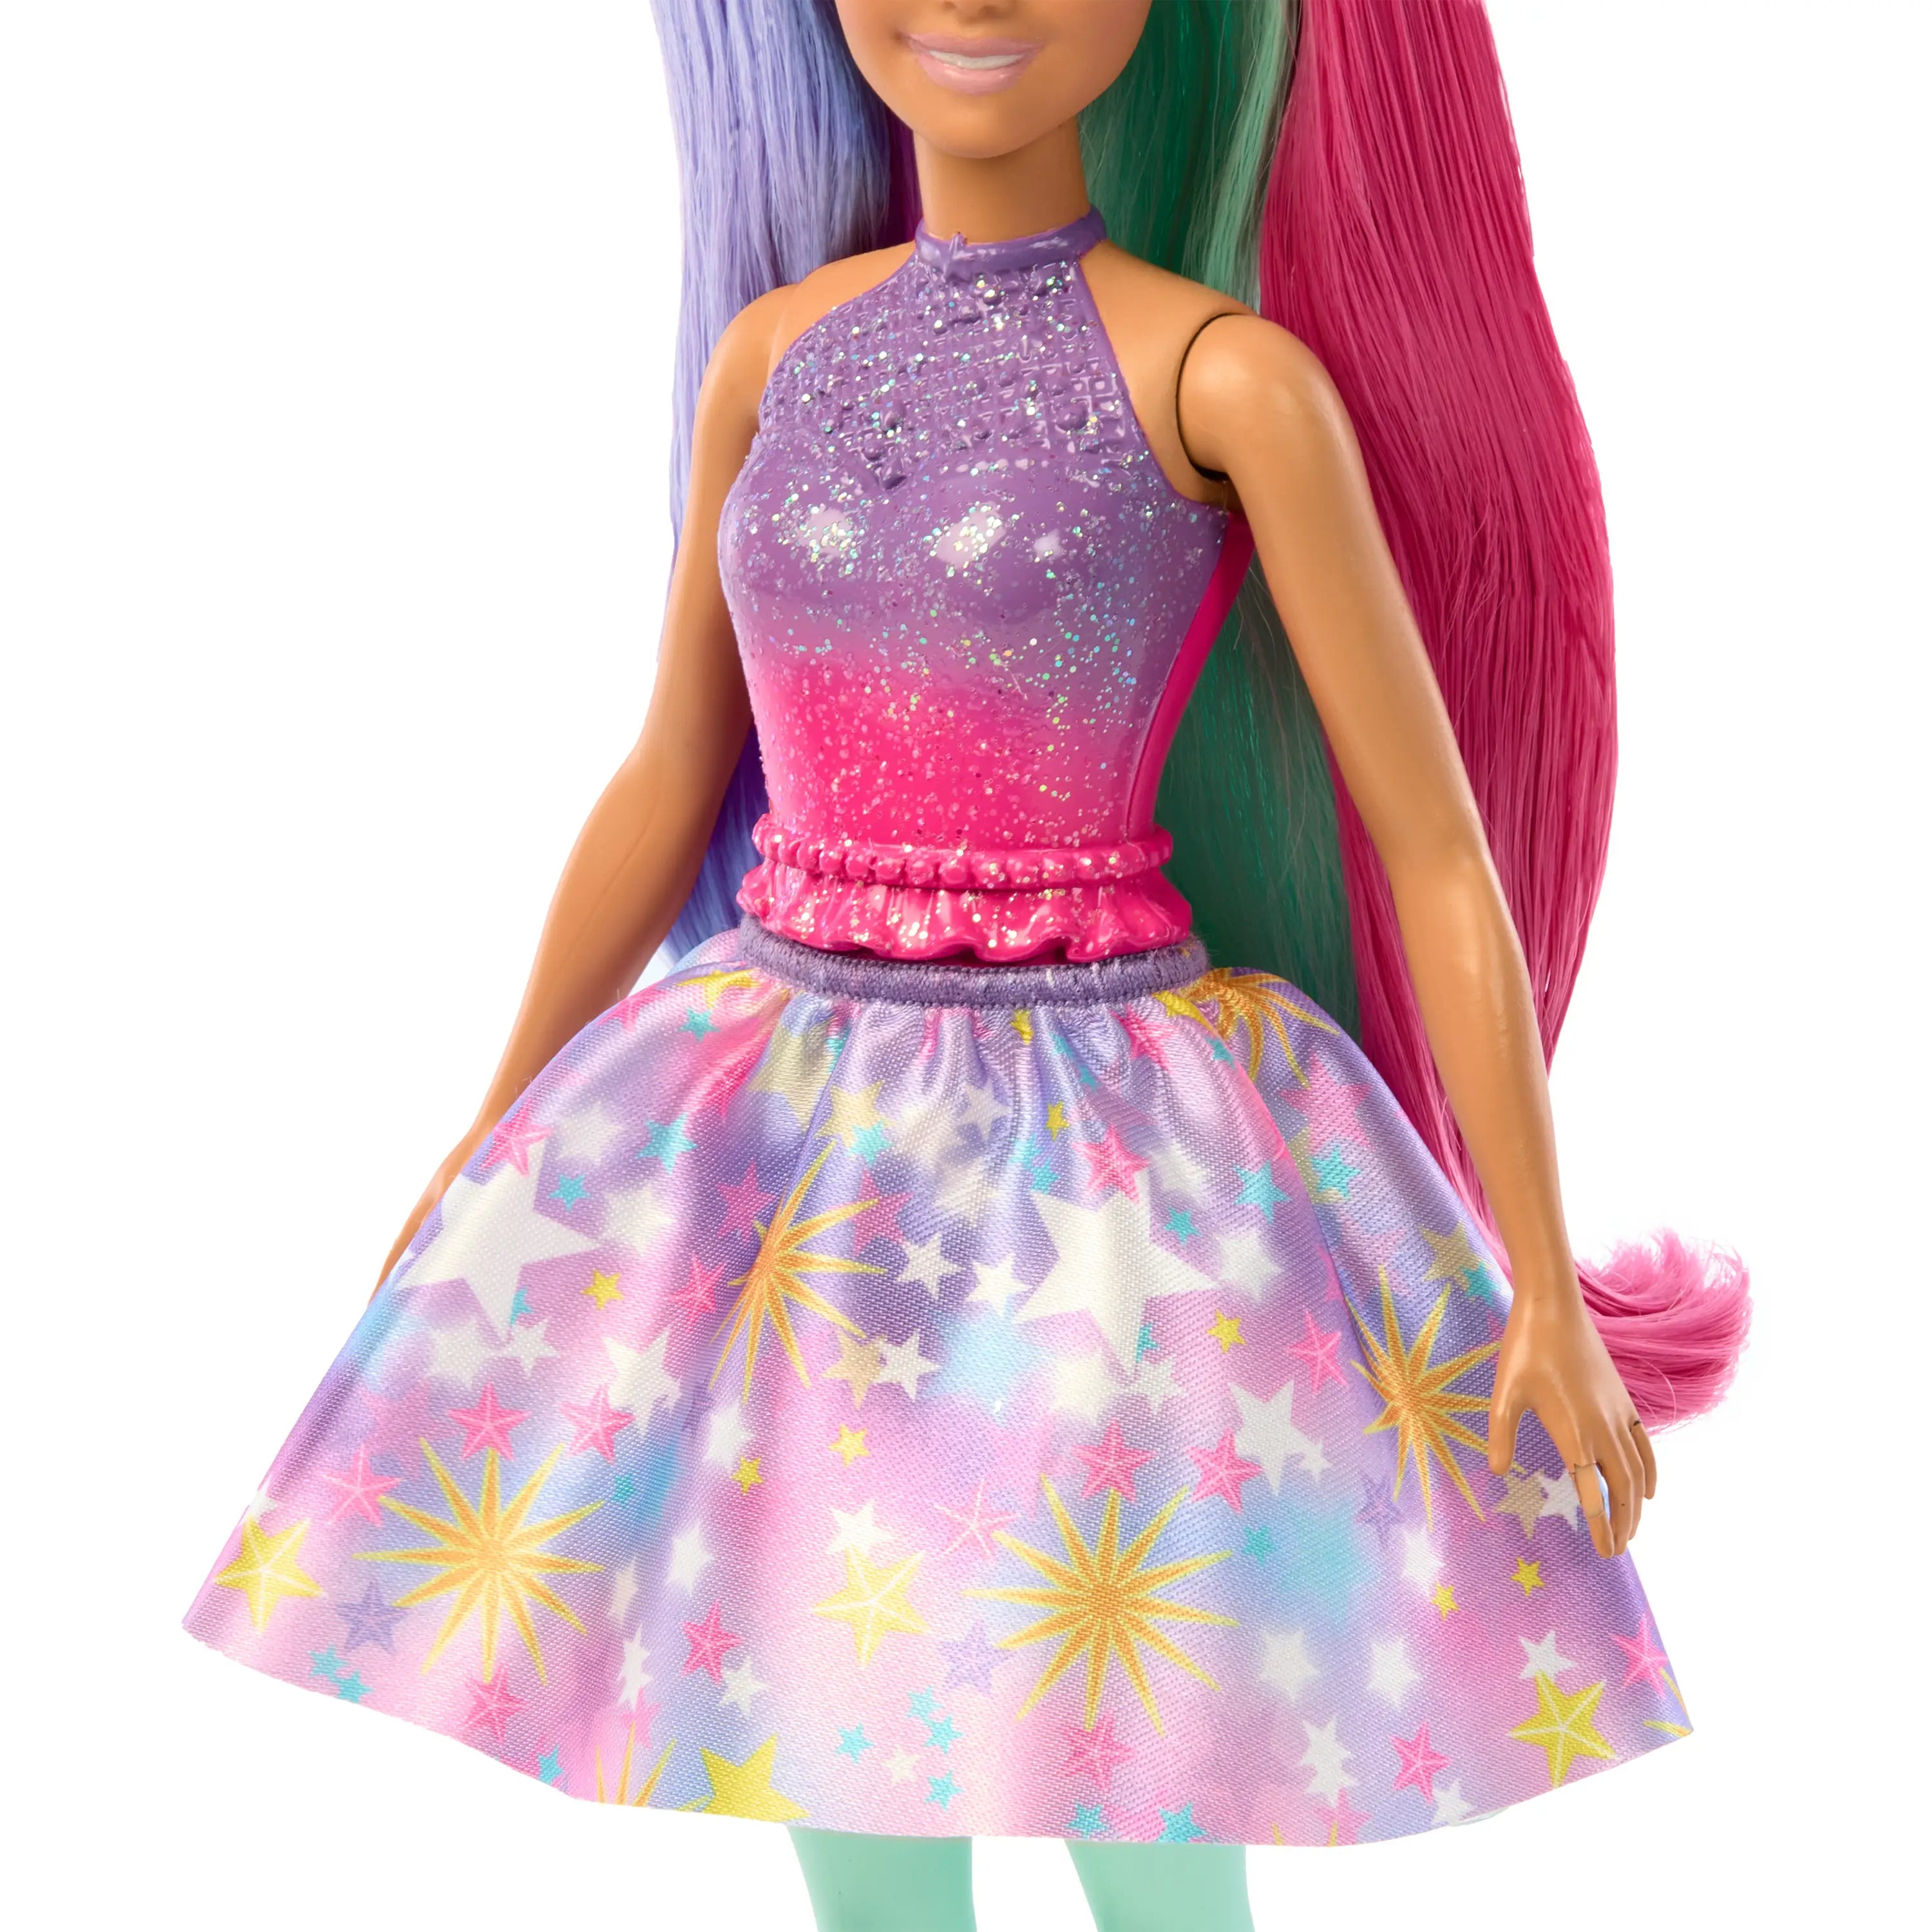 Barbie A Touch Of Magic: Brooklyn Roberts